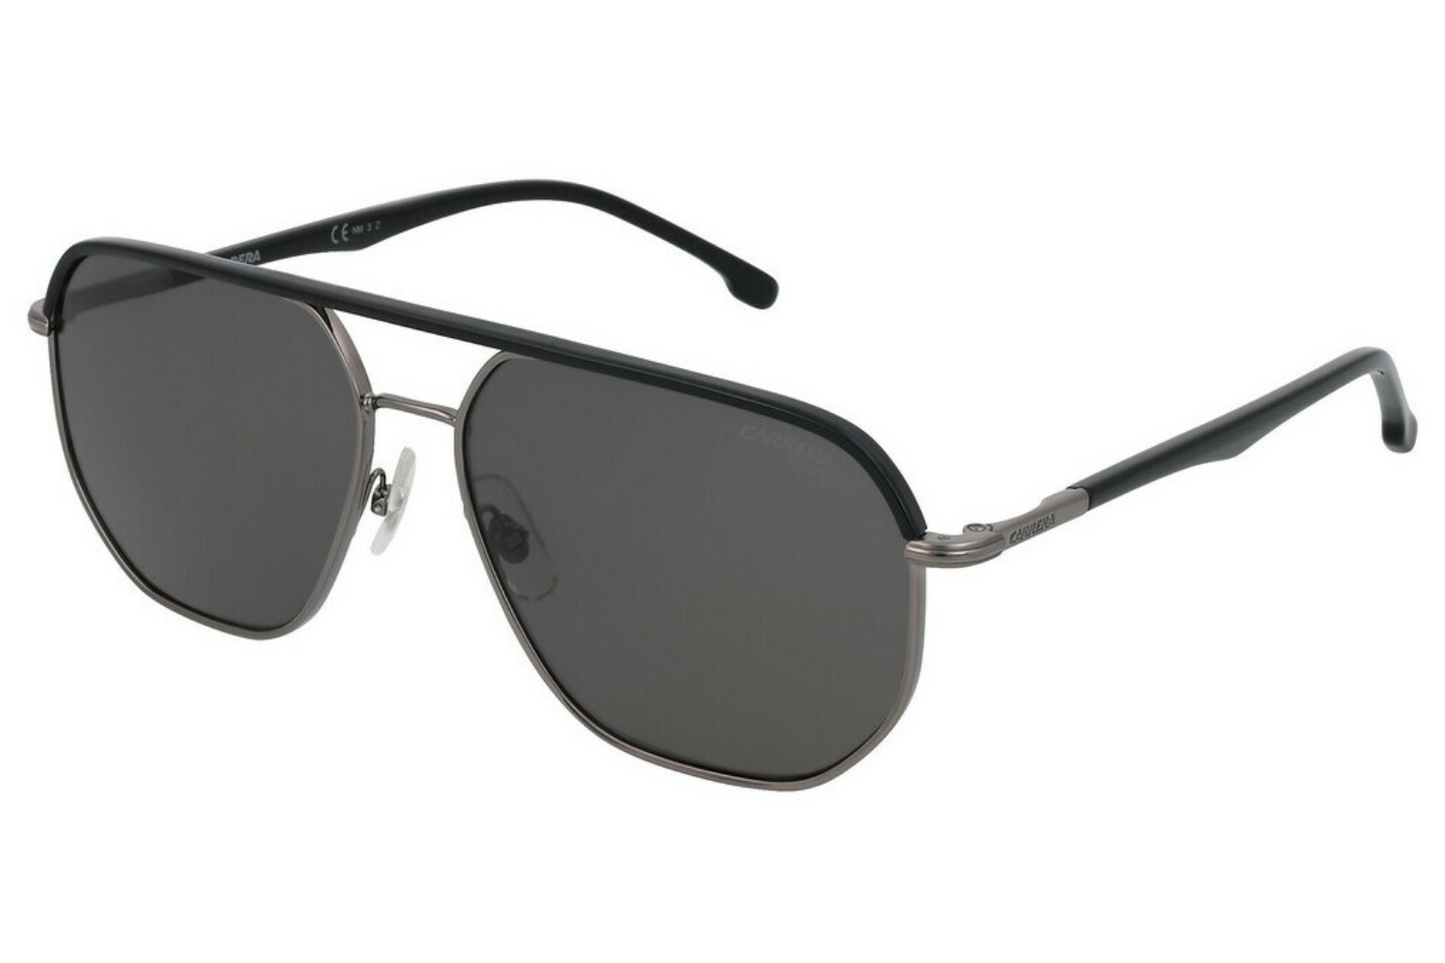 Carrera Sunglasses CA 304/S